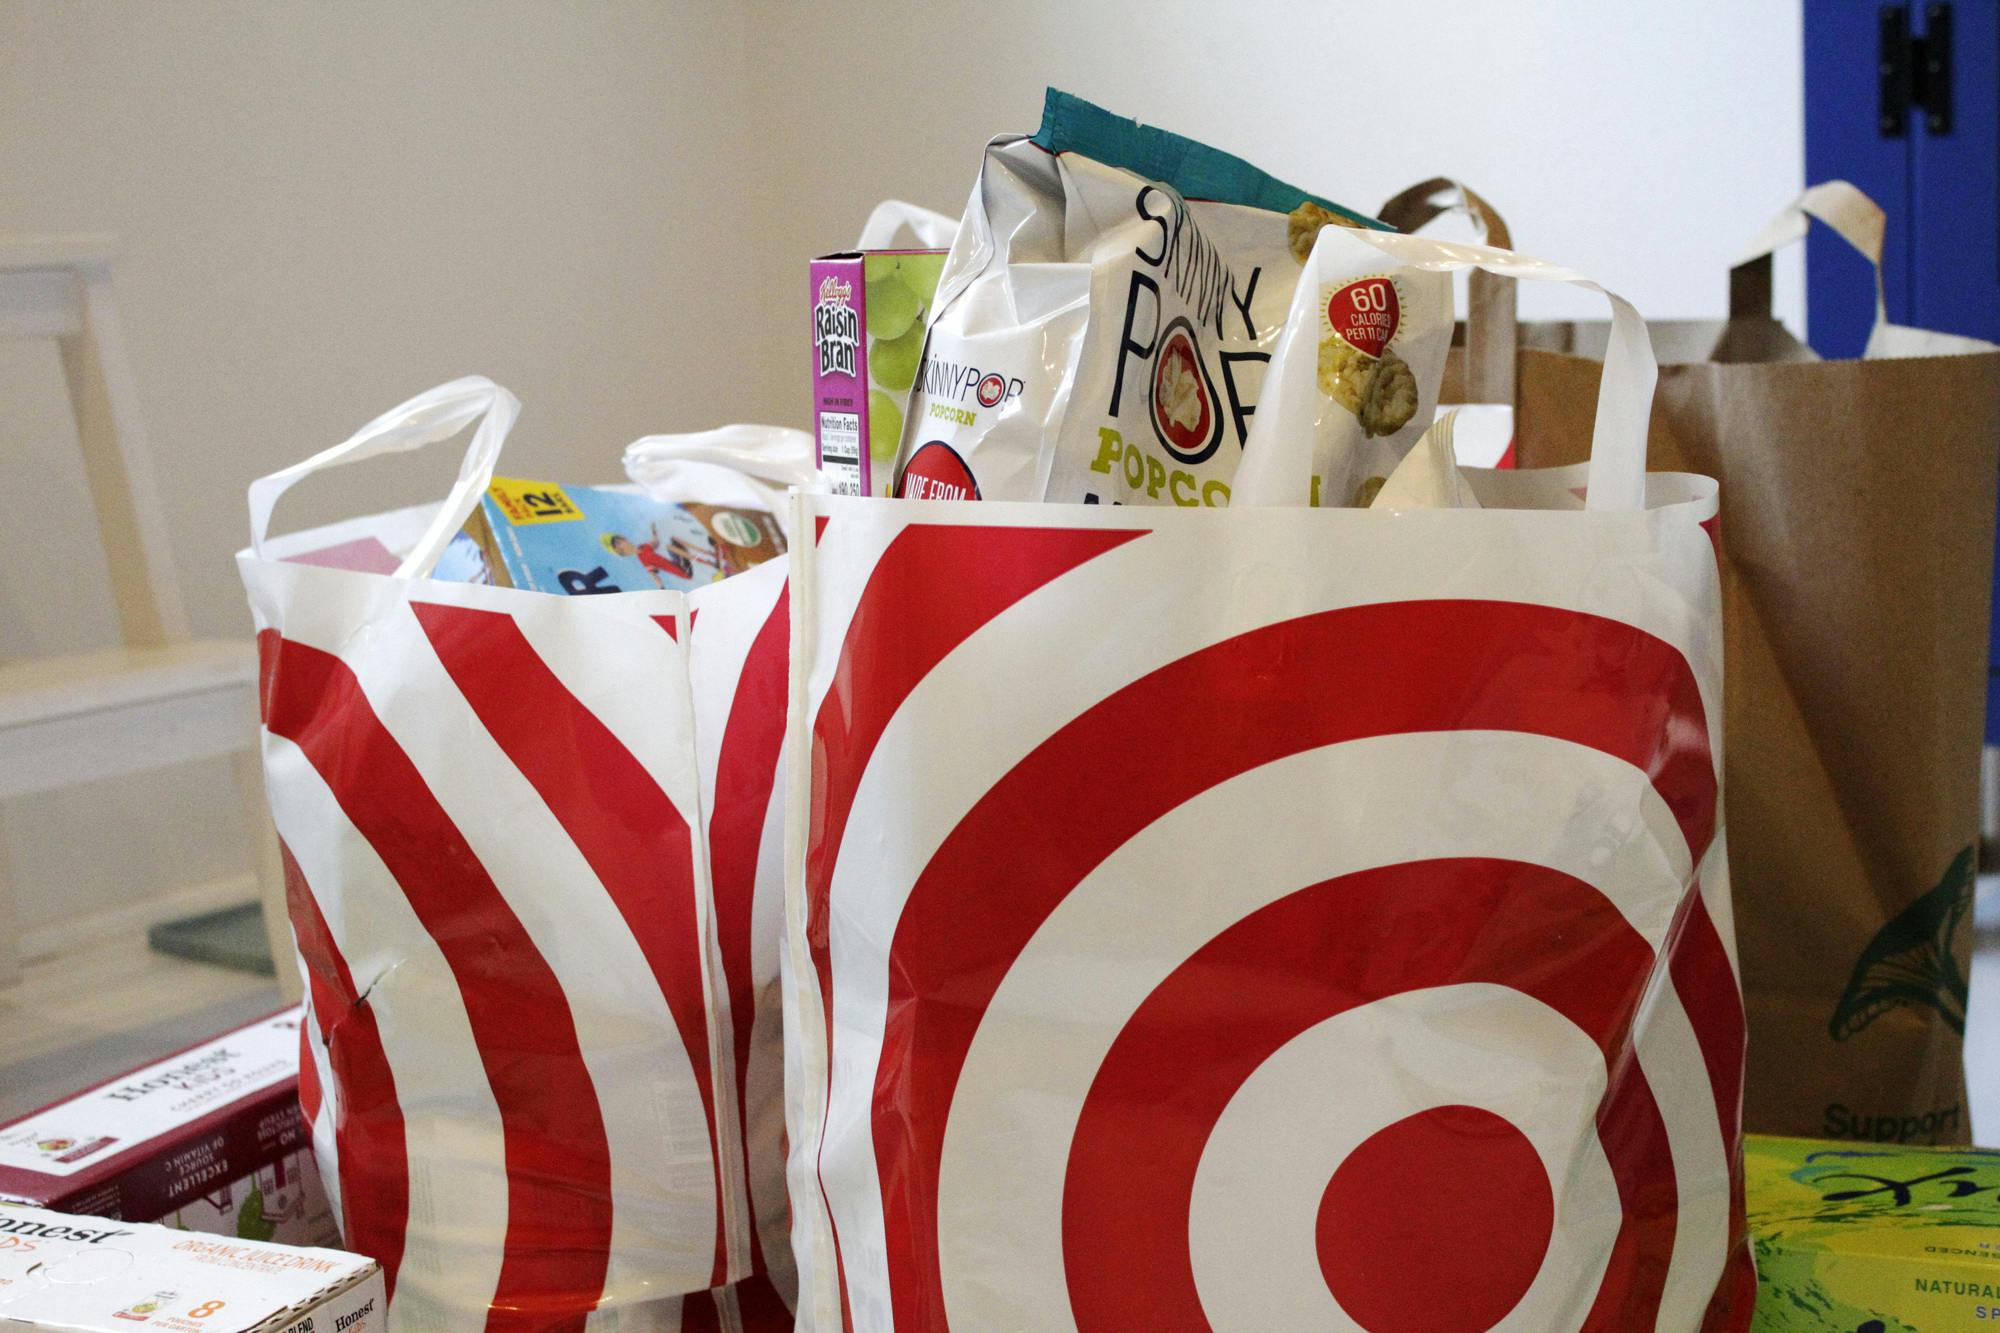 Target's Foldable Summer Beach Bags Start at $10